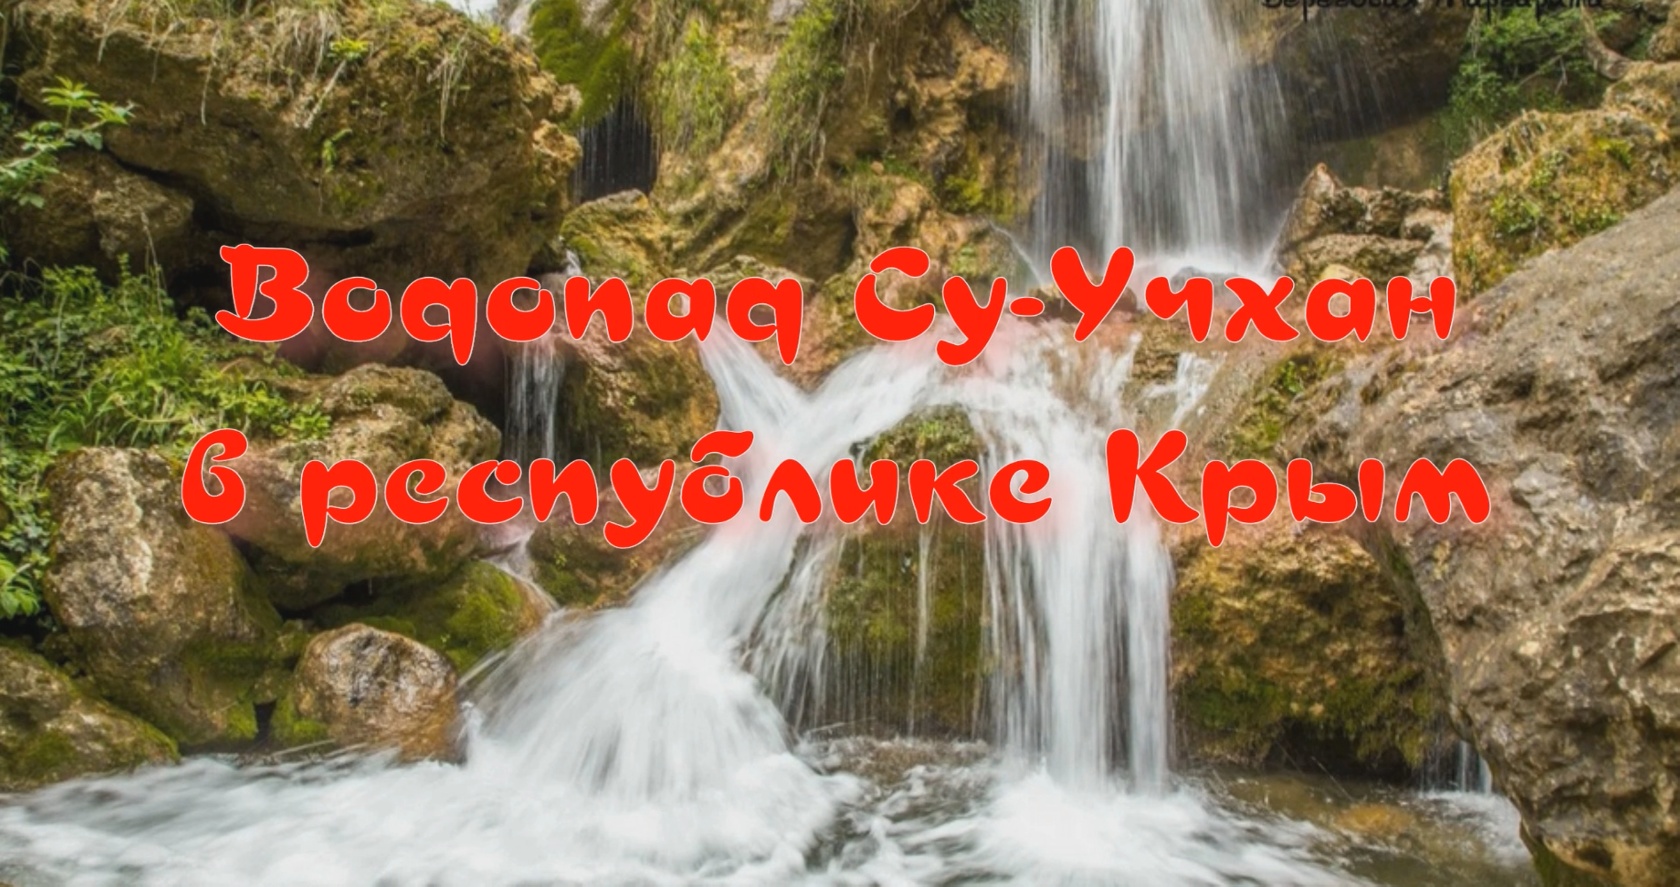 Су-Учхан - красивейший водопад Крыма